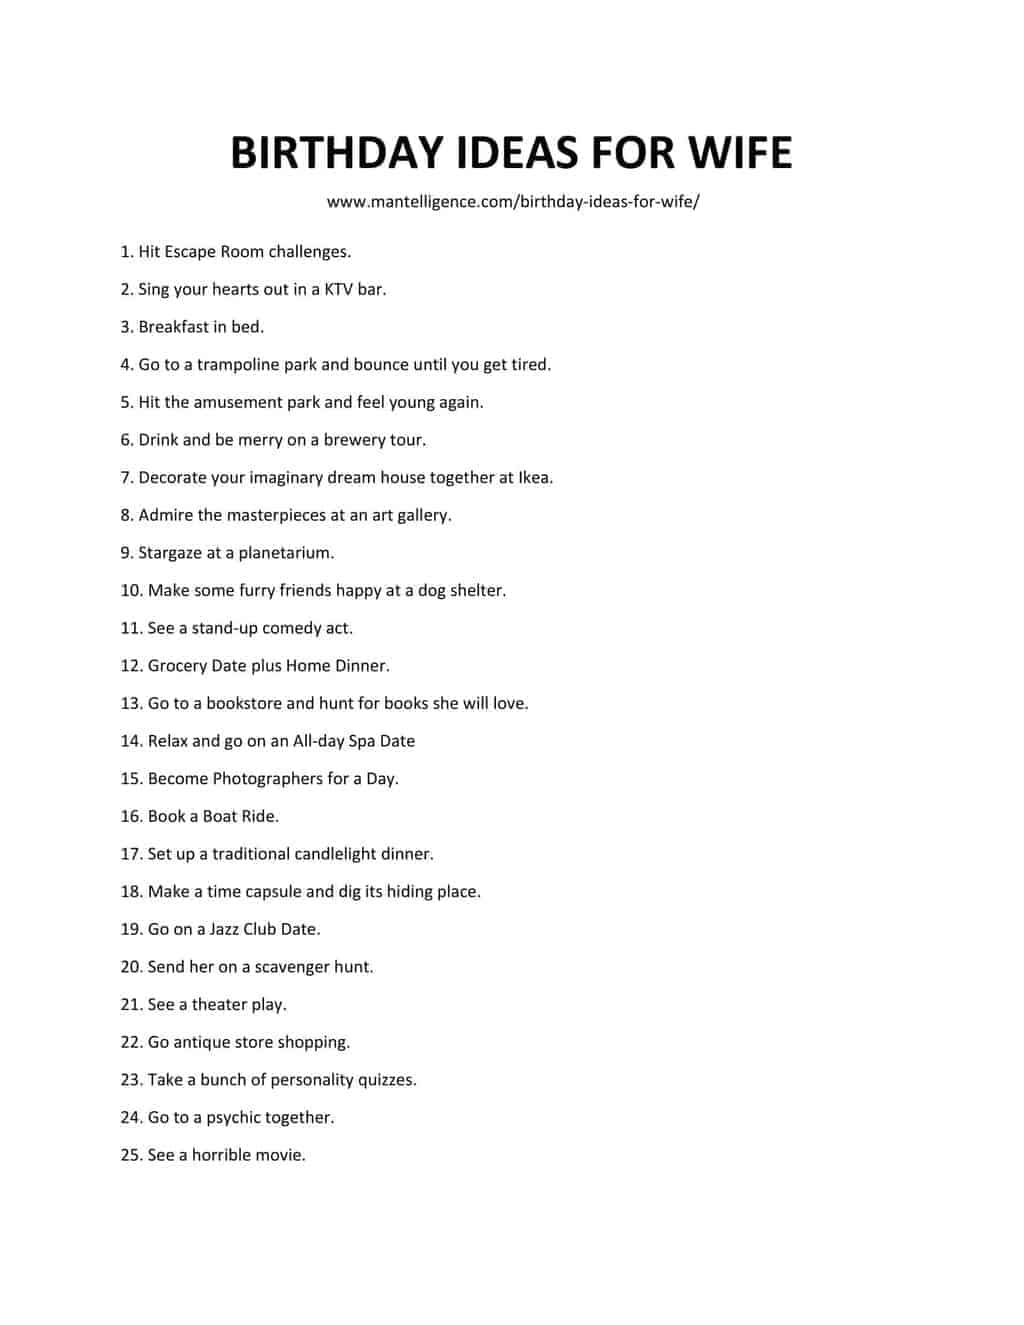 list of BIRTHDAY IDEAS FOR WIFE